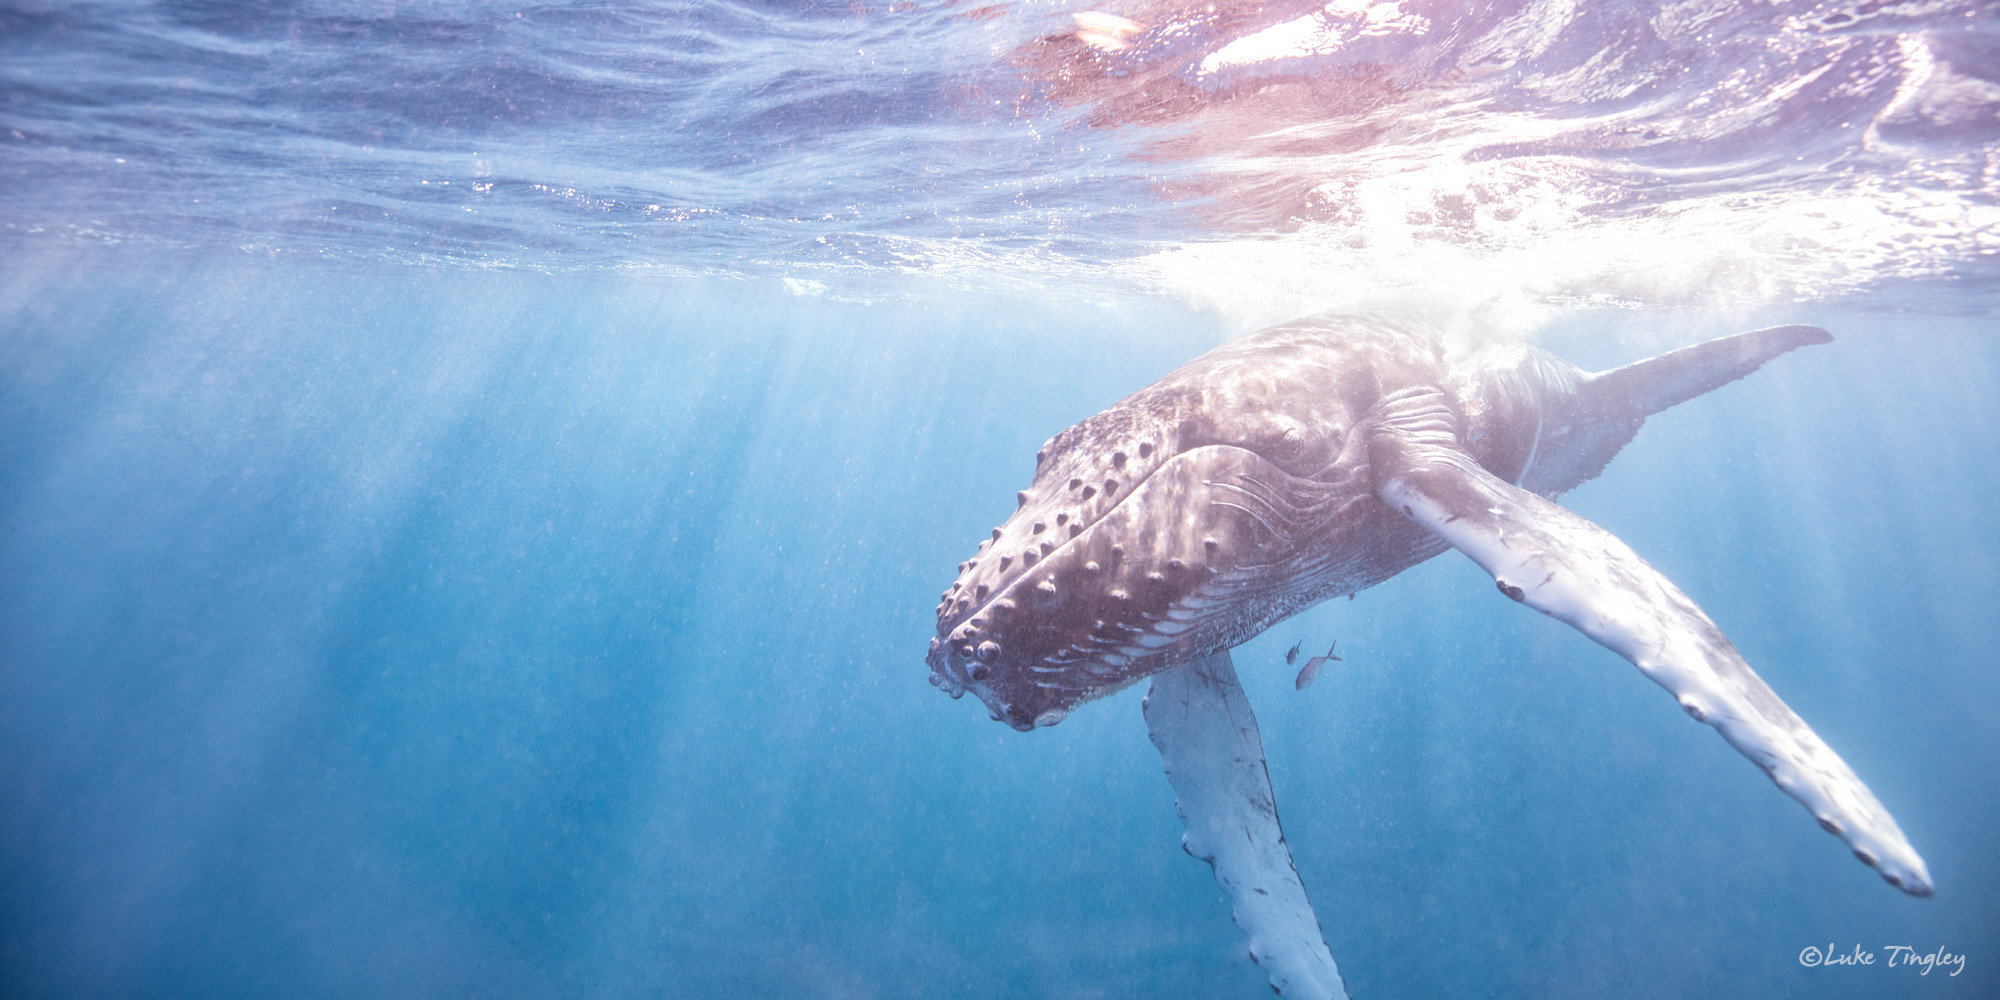 Aquatic Adventures, Caribbean, Cheeseman's Ecology Safari, Dominican Republic, Puerto Plata, Silverbank, Underwater Photography, Ocean, Humpback Whale, Humpback Whale Calf